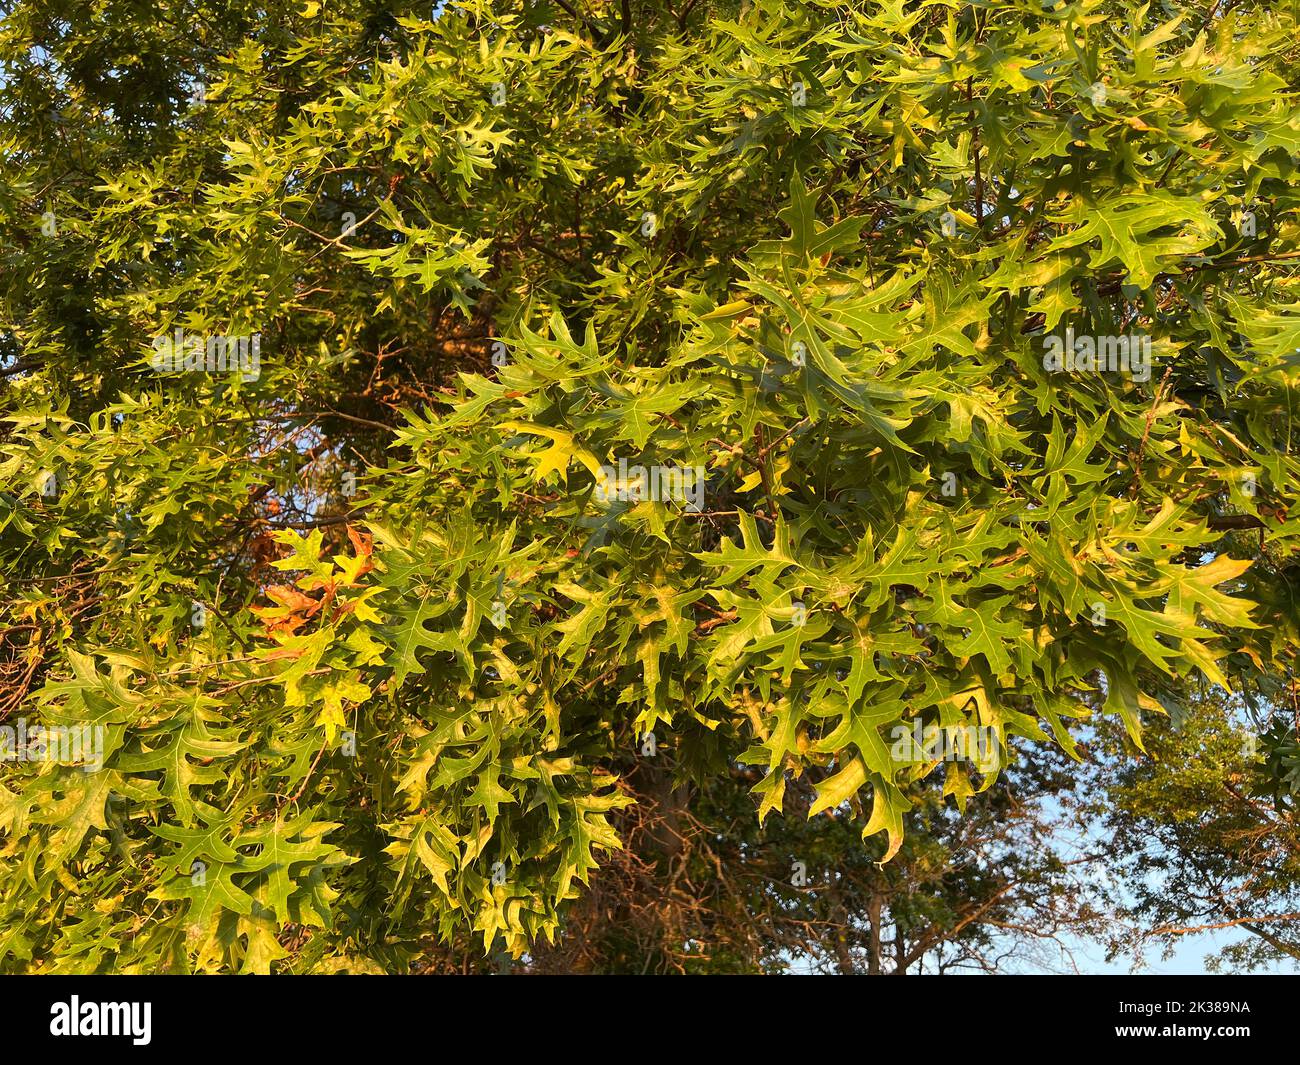 Northern Pink Oak Leaves, Summer, (Quercus palustris), E USA, von Dembinsky Photo Assoc Stockfoto